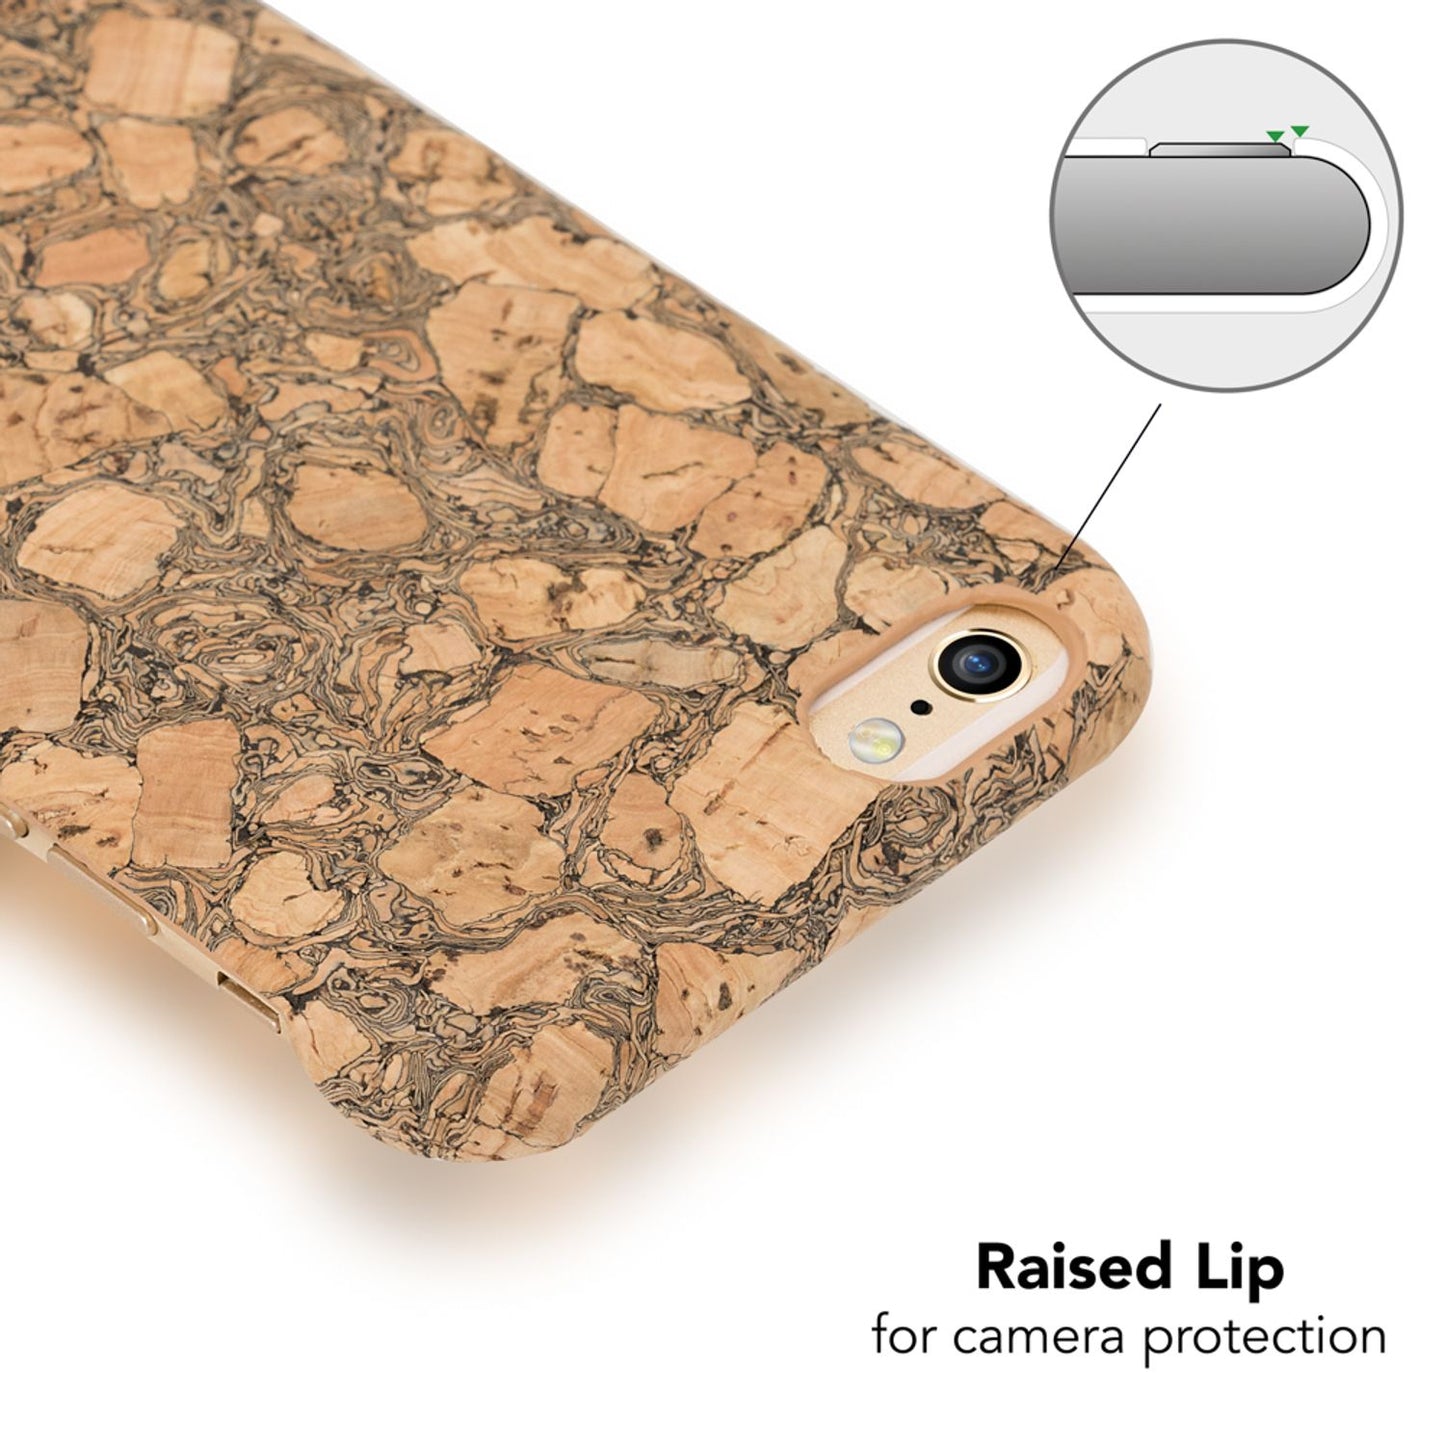 Apple iPhone 6 6s Kork Handy Hülle von NALIA, Holz Look Case Cover Schutzhülle